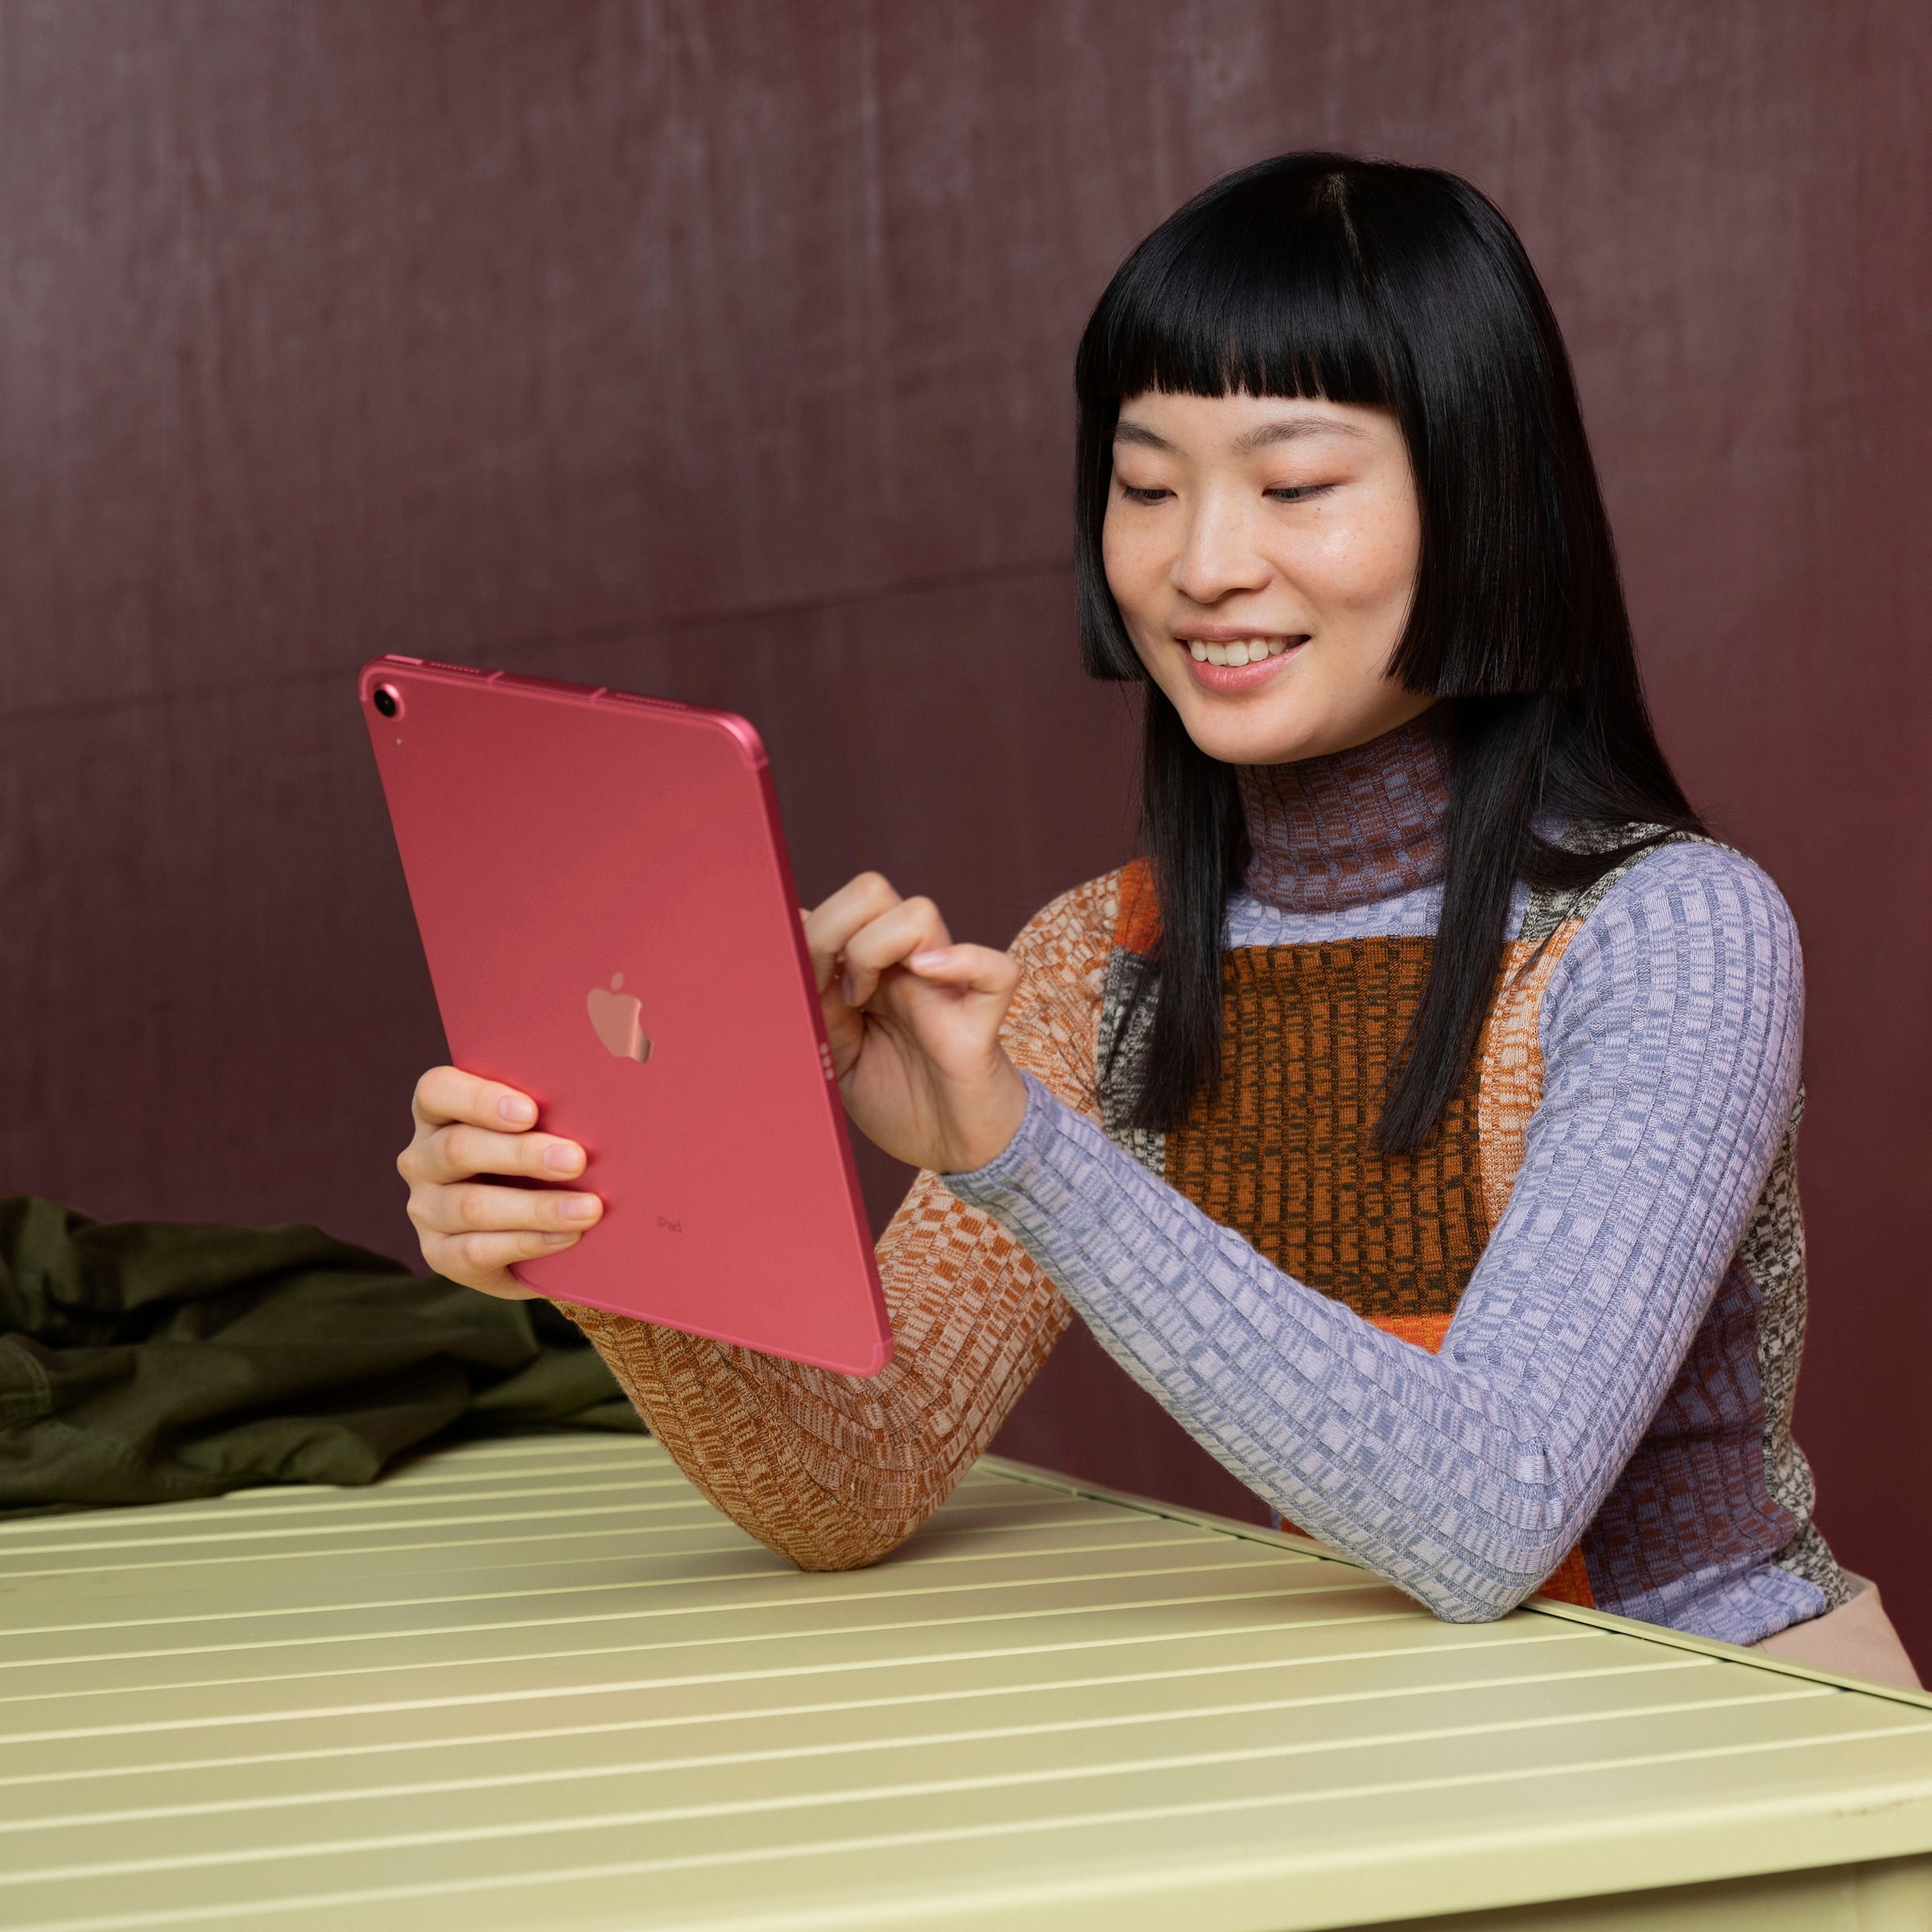 Apple Tablet »iPad 2022 Wi-Fi (10 Generation)«, (iPadOS)